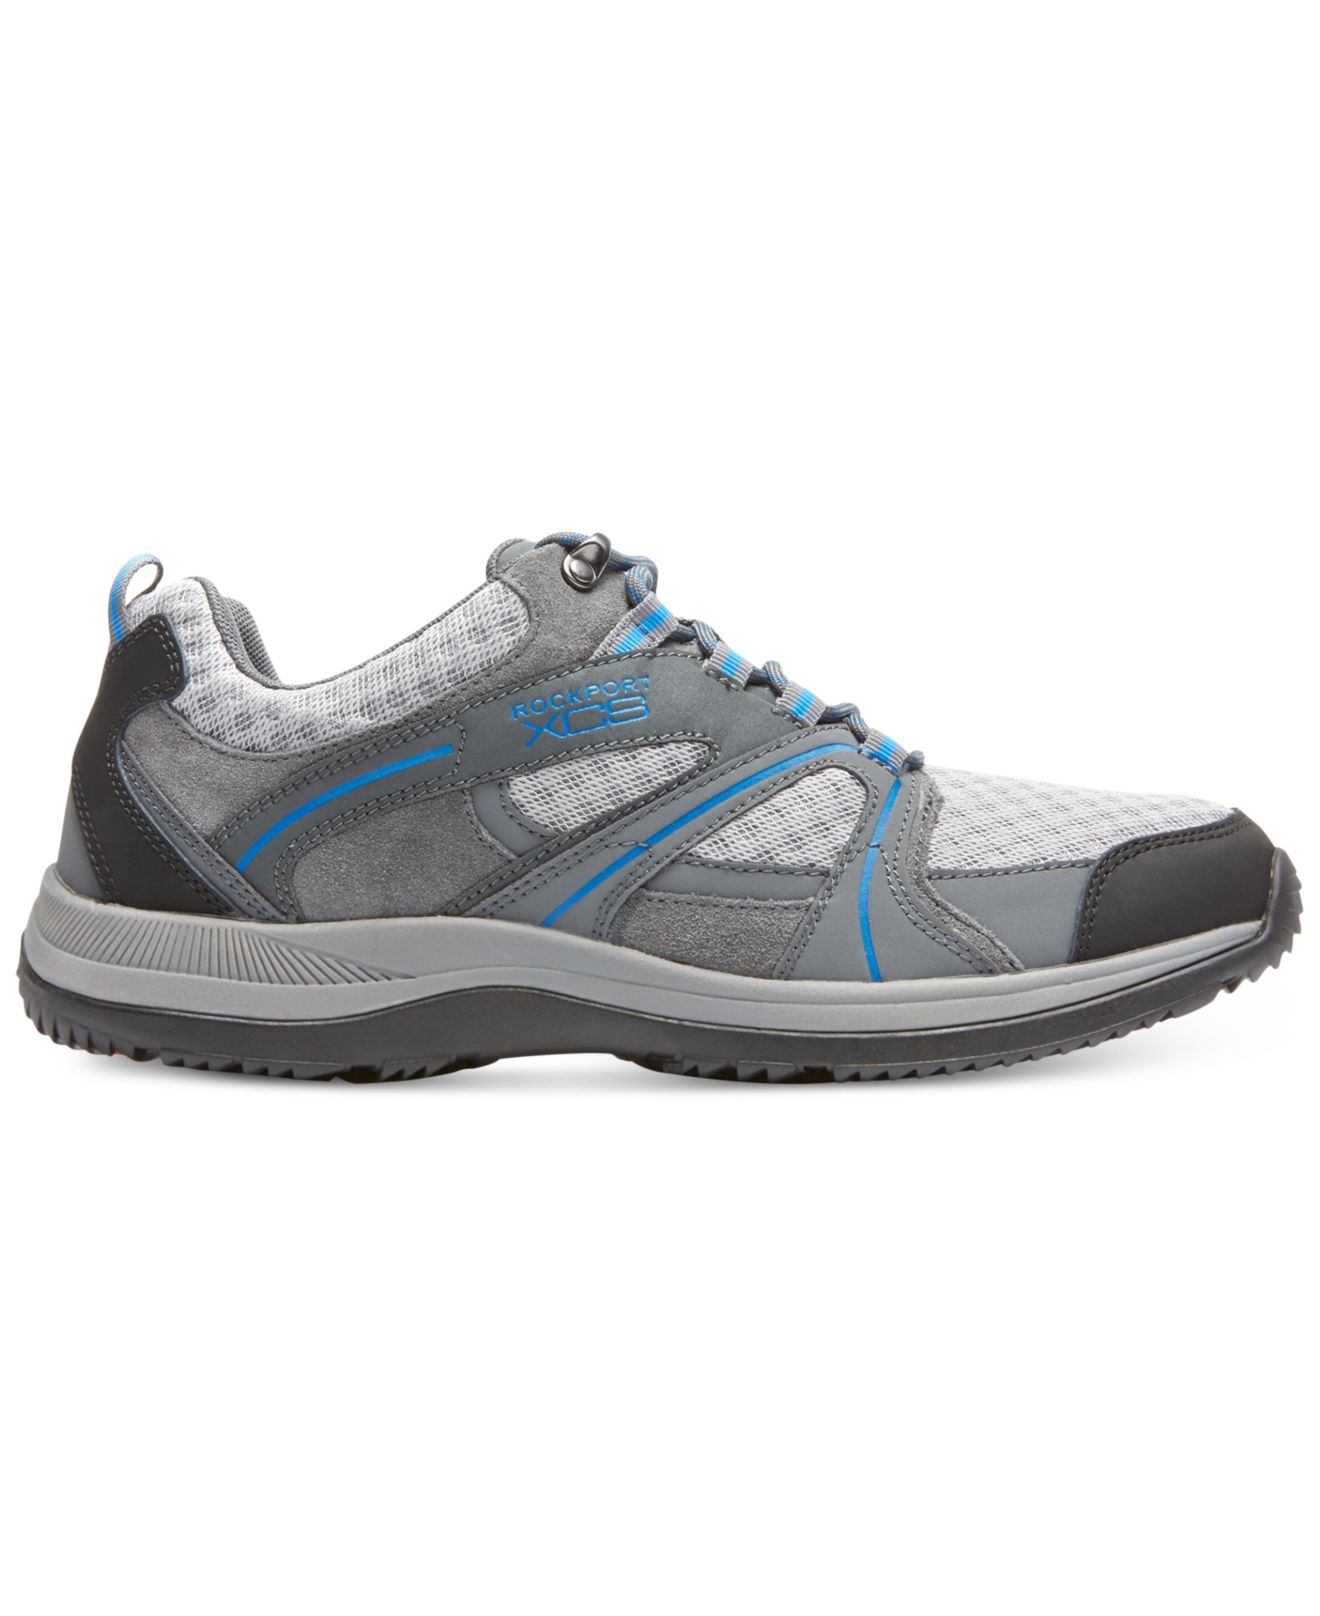 Rockport Xcs Mudguard Sneakers in Light Grey (Gray) for Men - Lyst